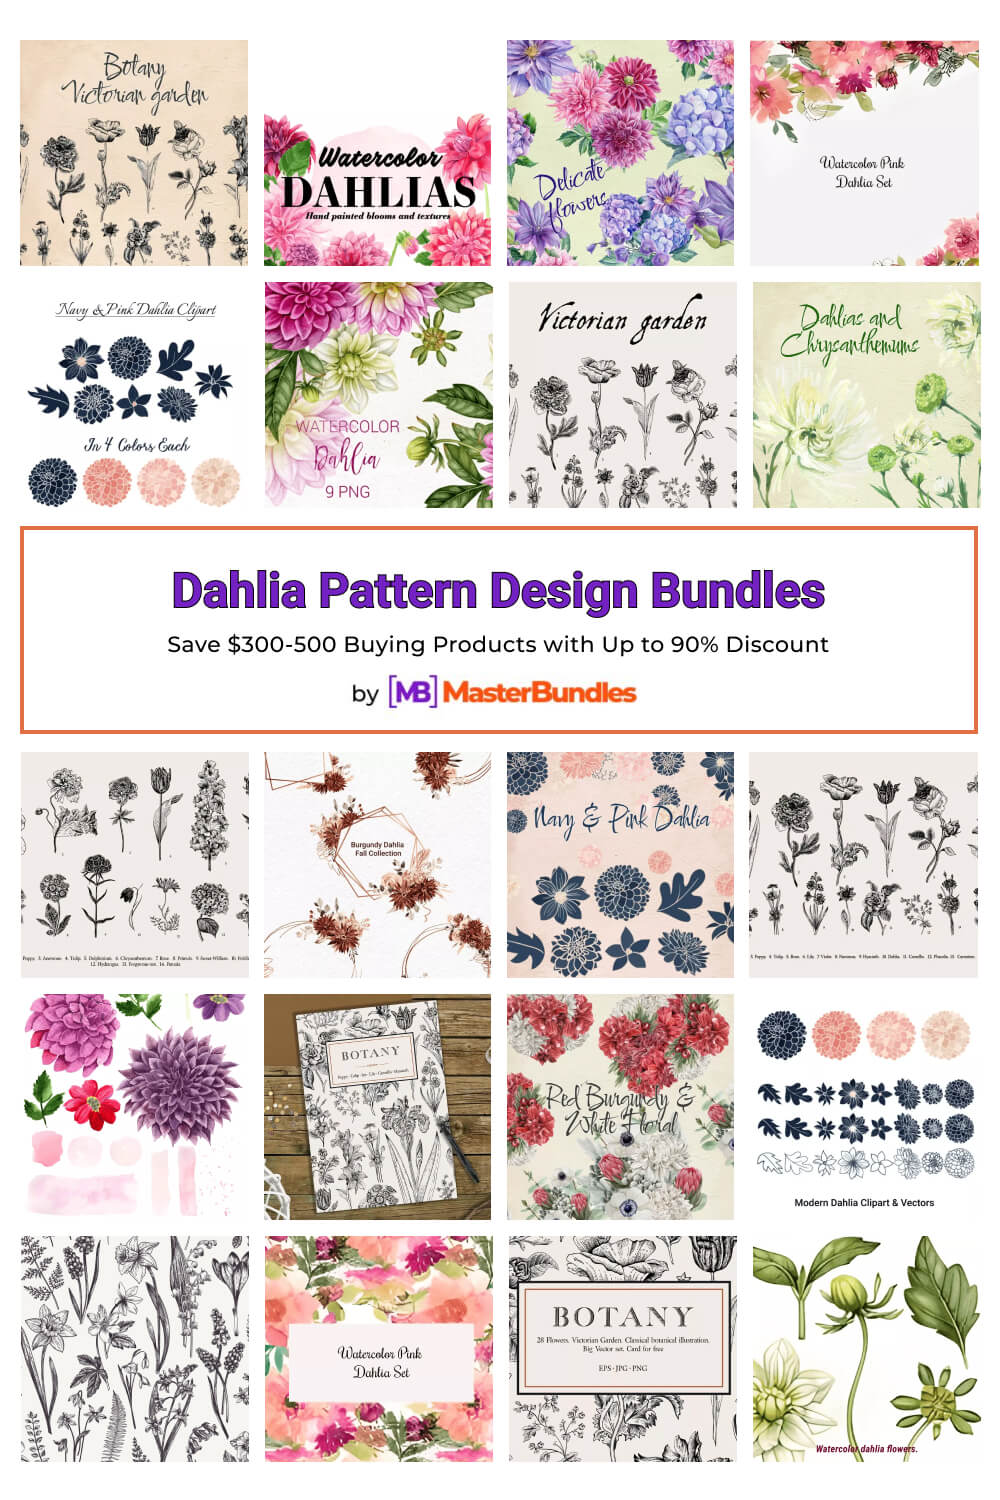 dahlia pattern design bundles pinterest image.